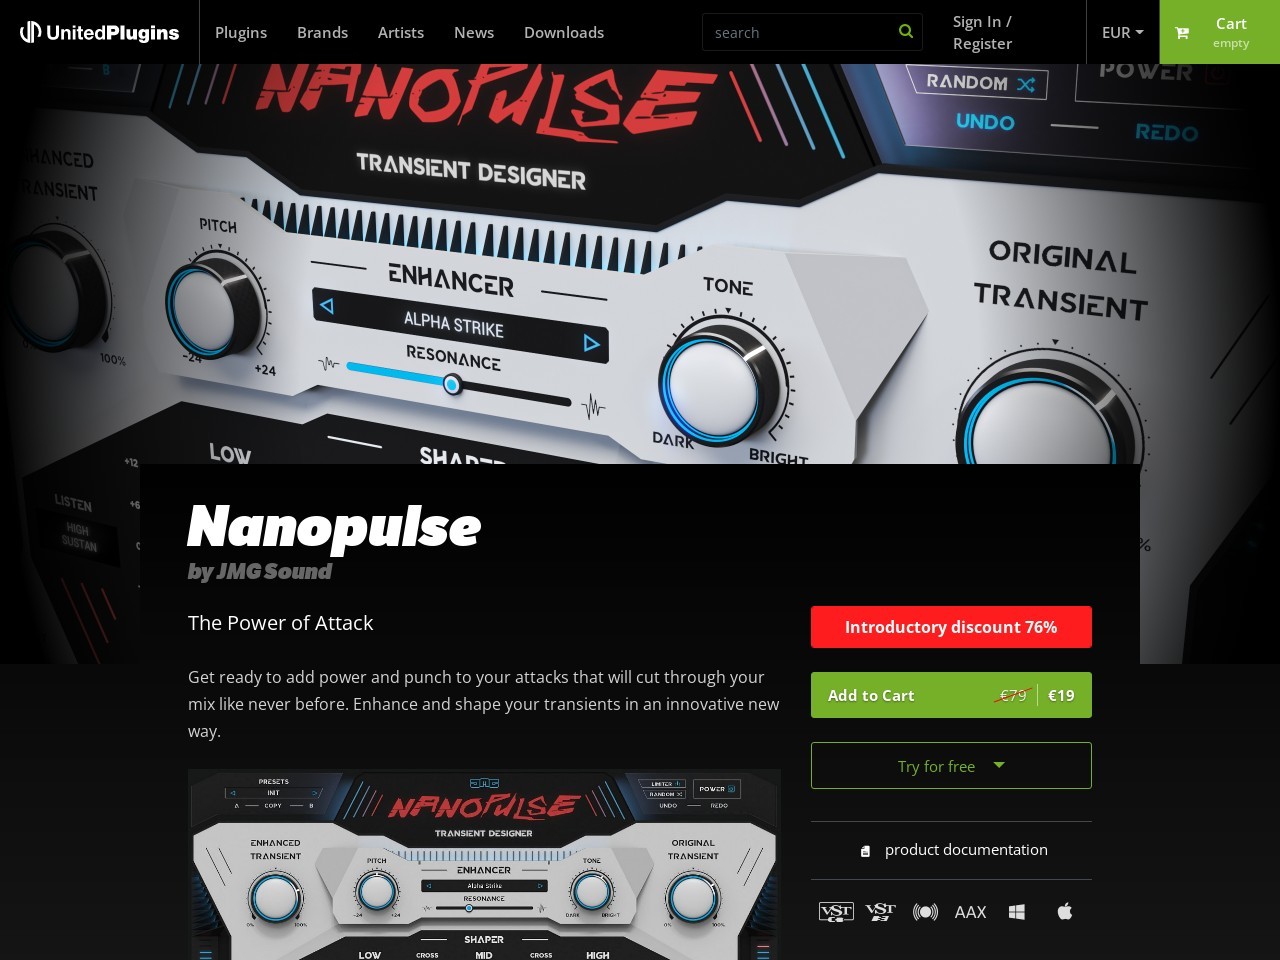 Nanopulse | UnitedPlugins